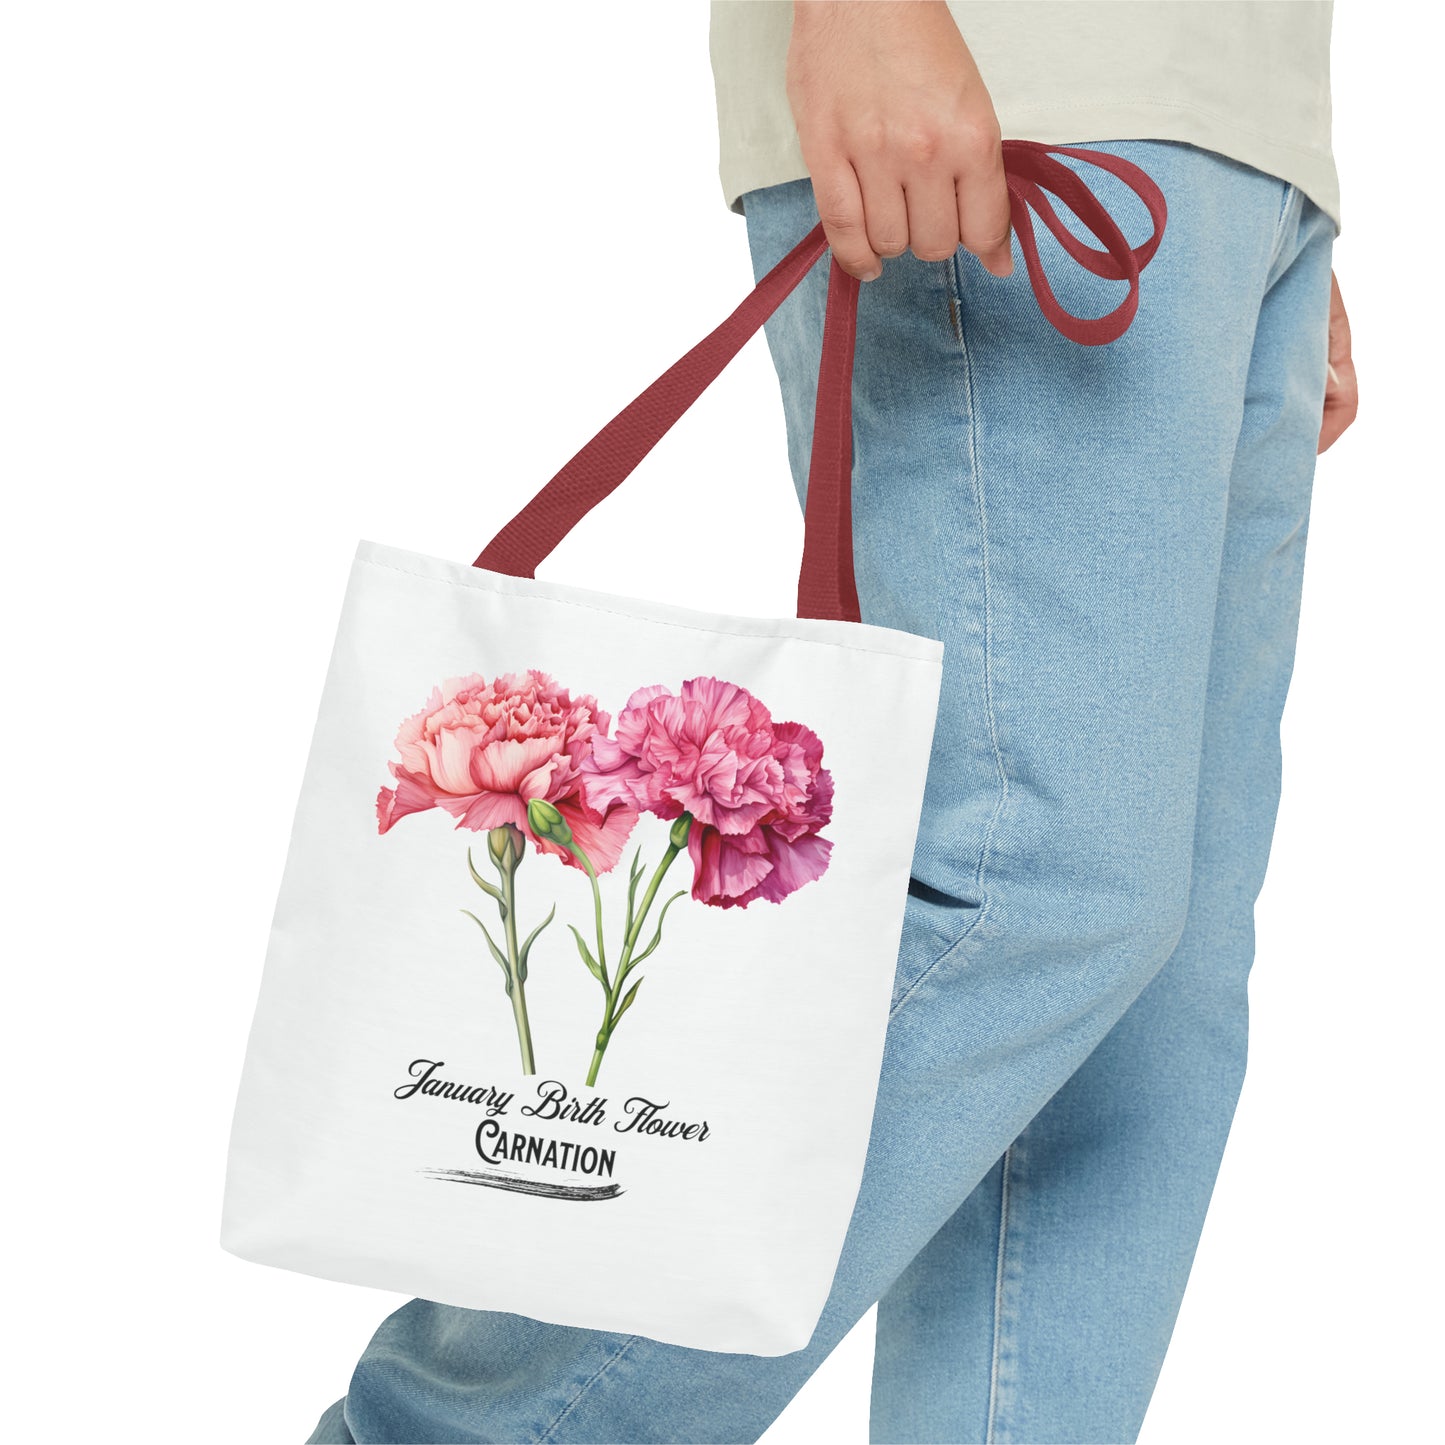 January Birth Flower: Carnation - Tote Bag (AOP)